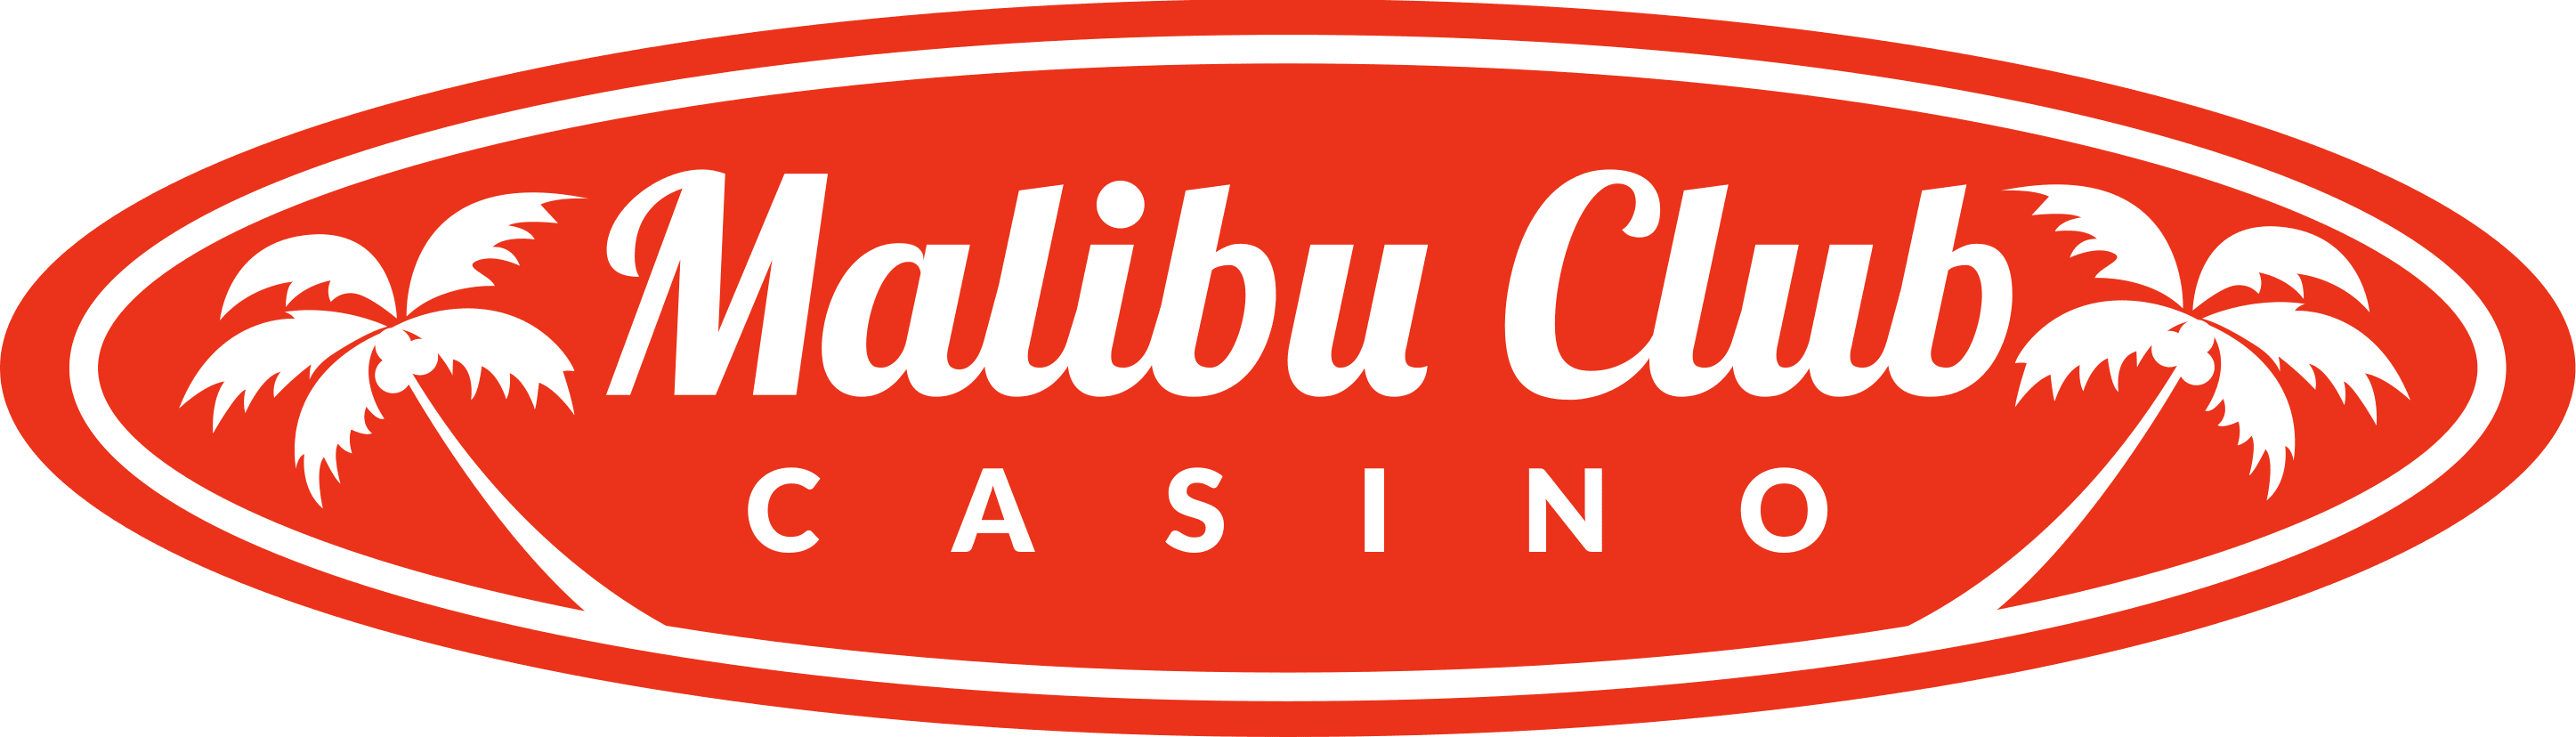 malibu-club-casino-logo